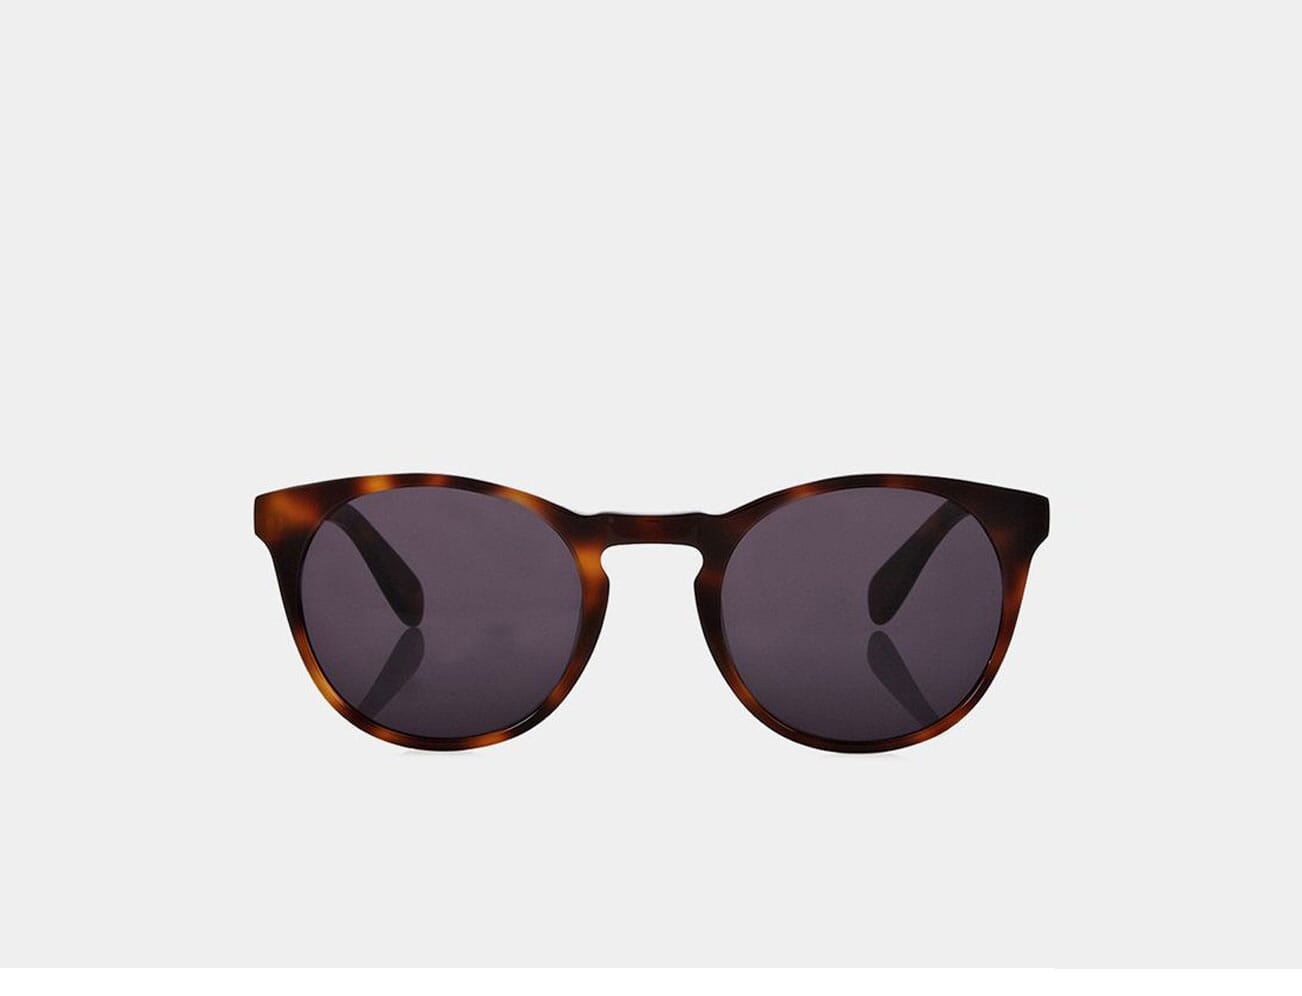 Finlay London Is The Sunglasses Of Summer 2020 | OPUMO Magazine